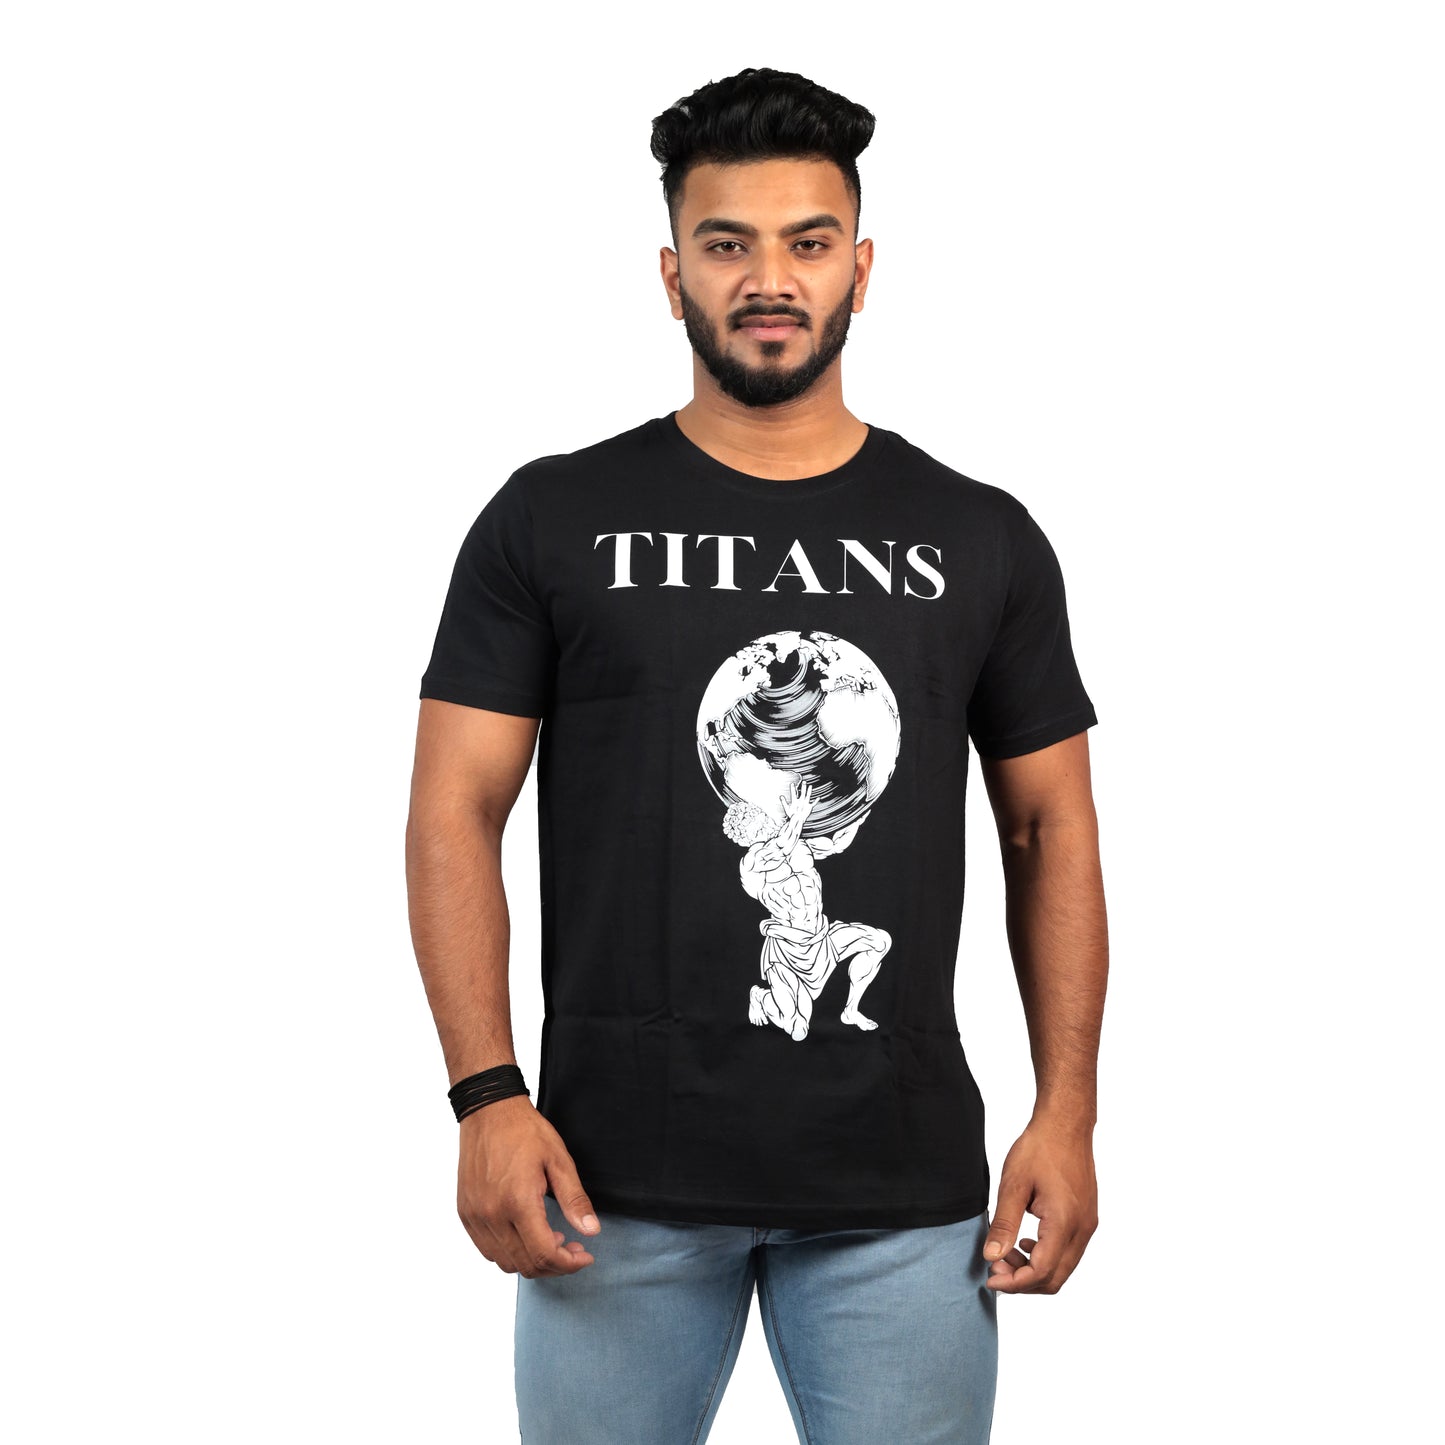 Titan Printed T-shirt In Black Color For Men